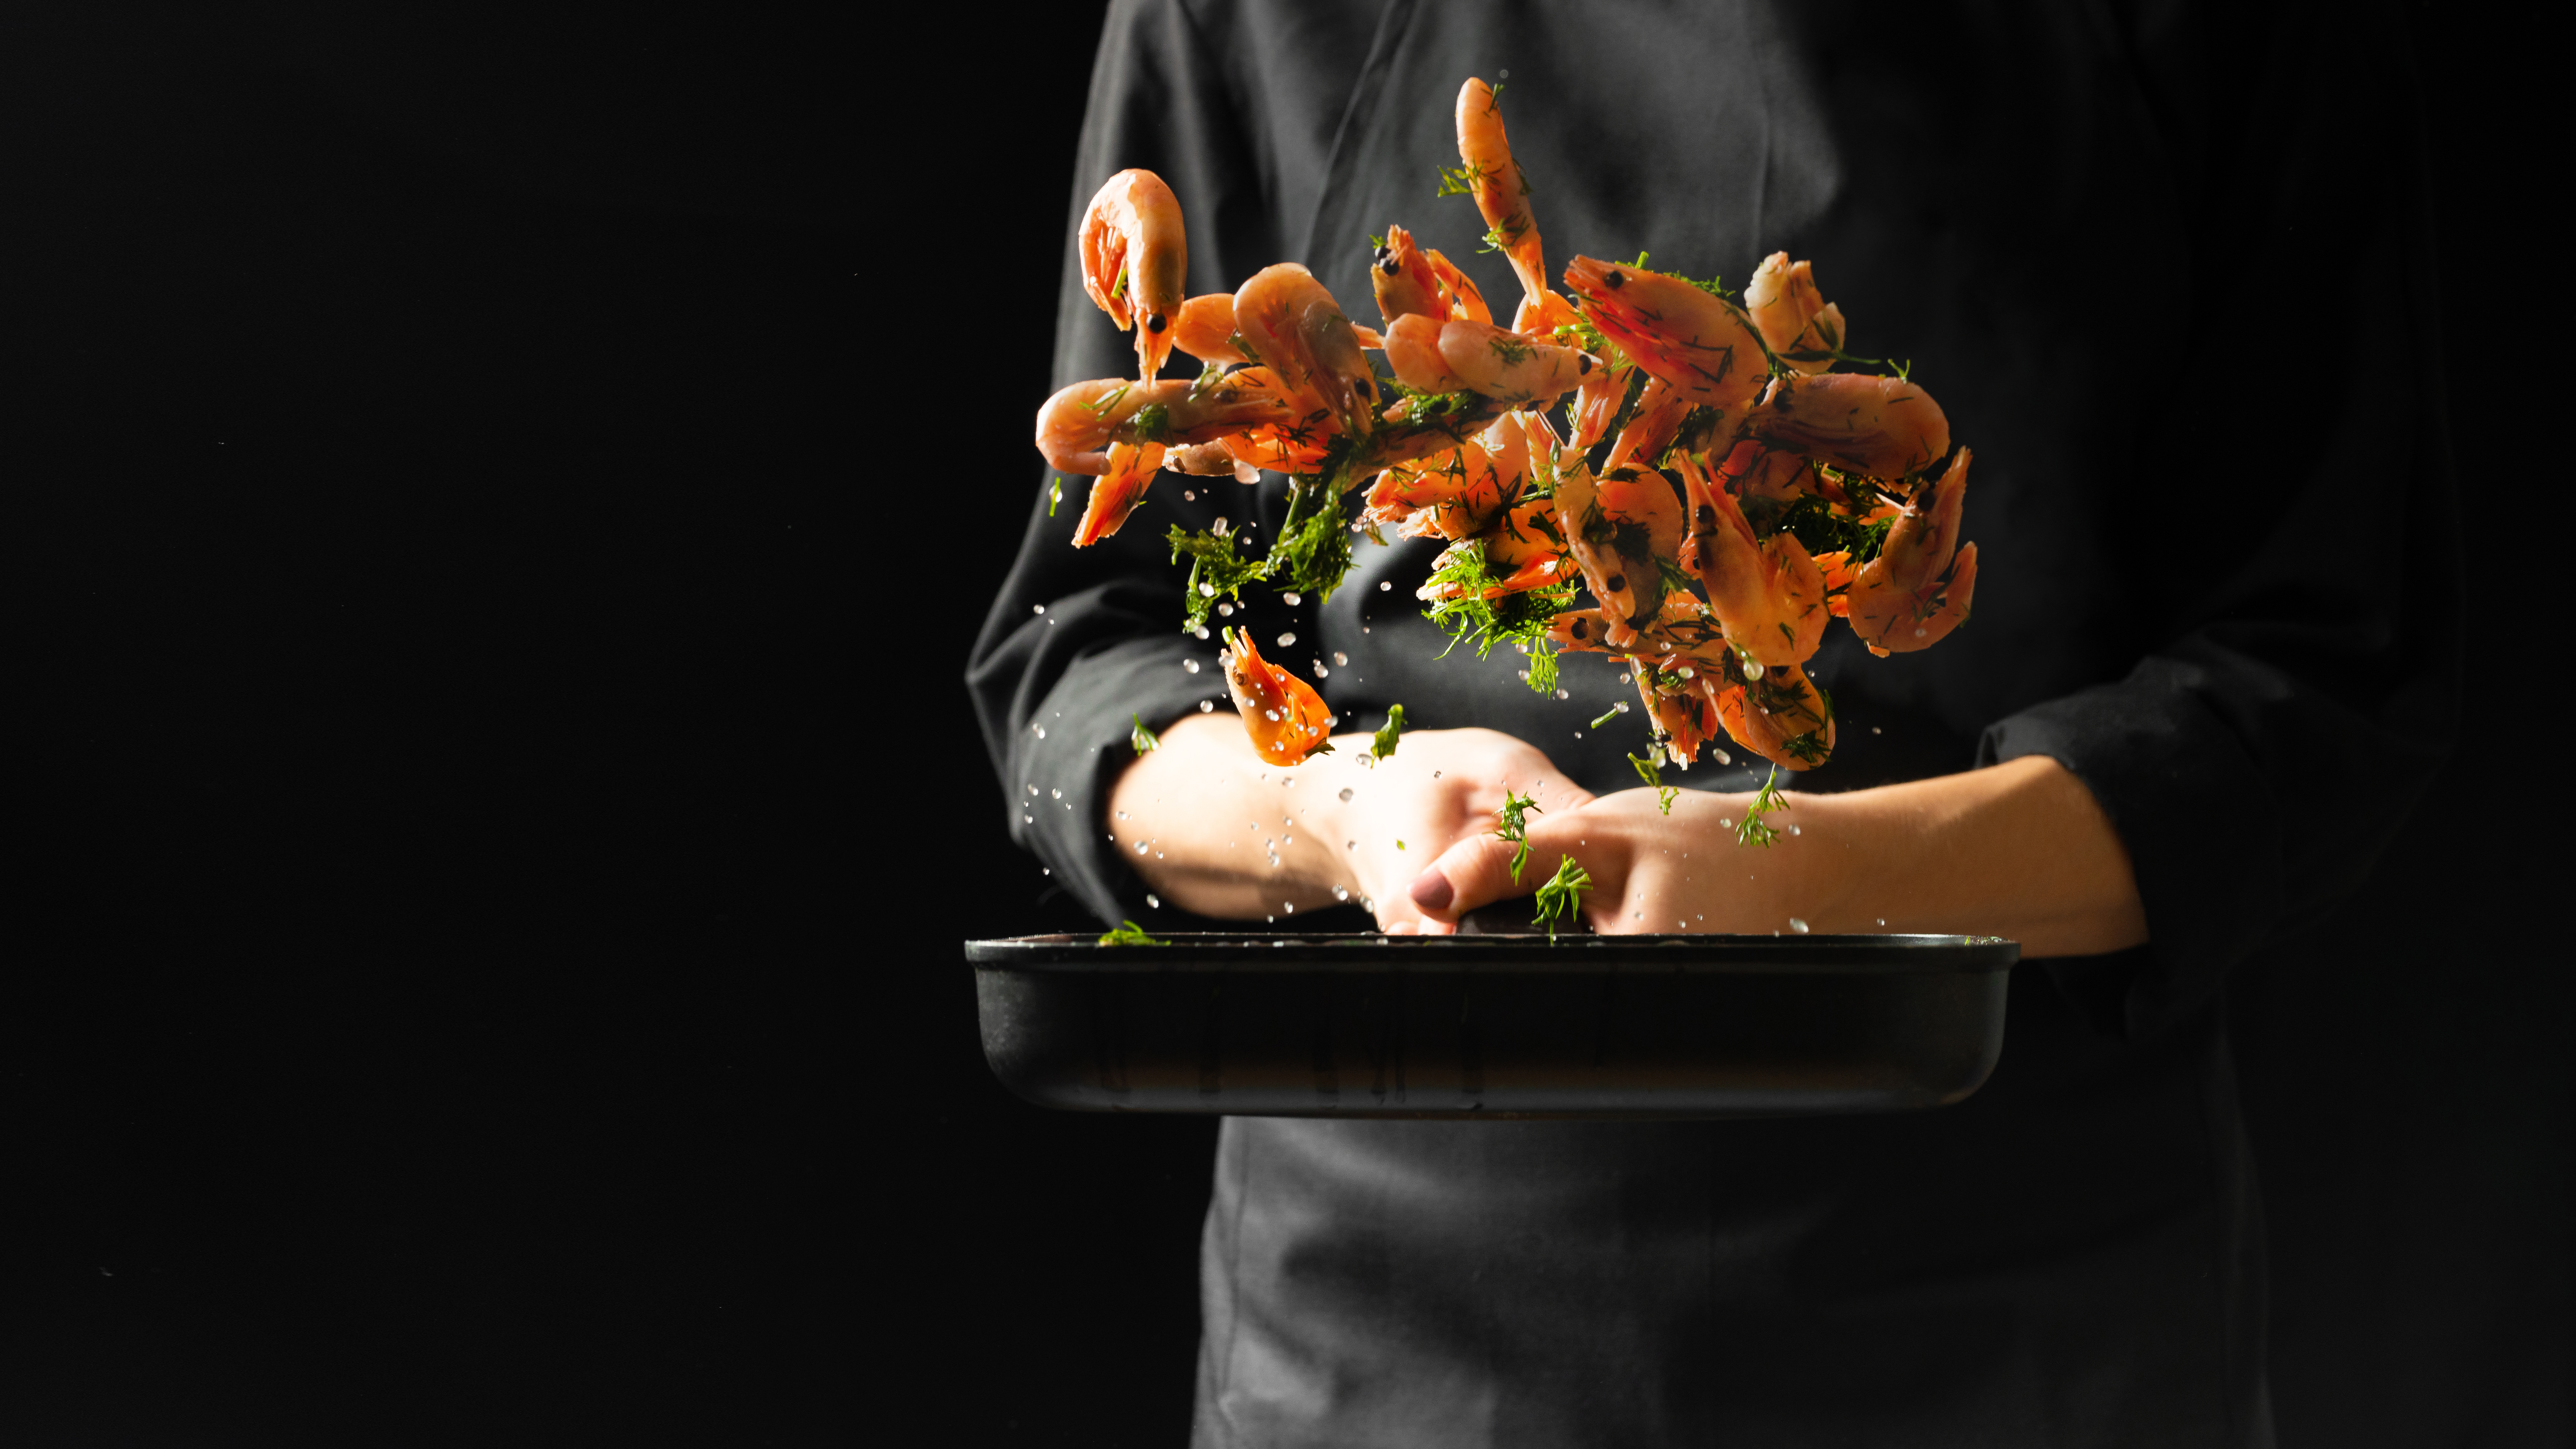 Professional chef | Source: Shutterstock